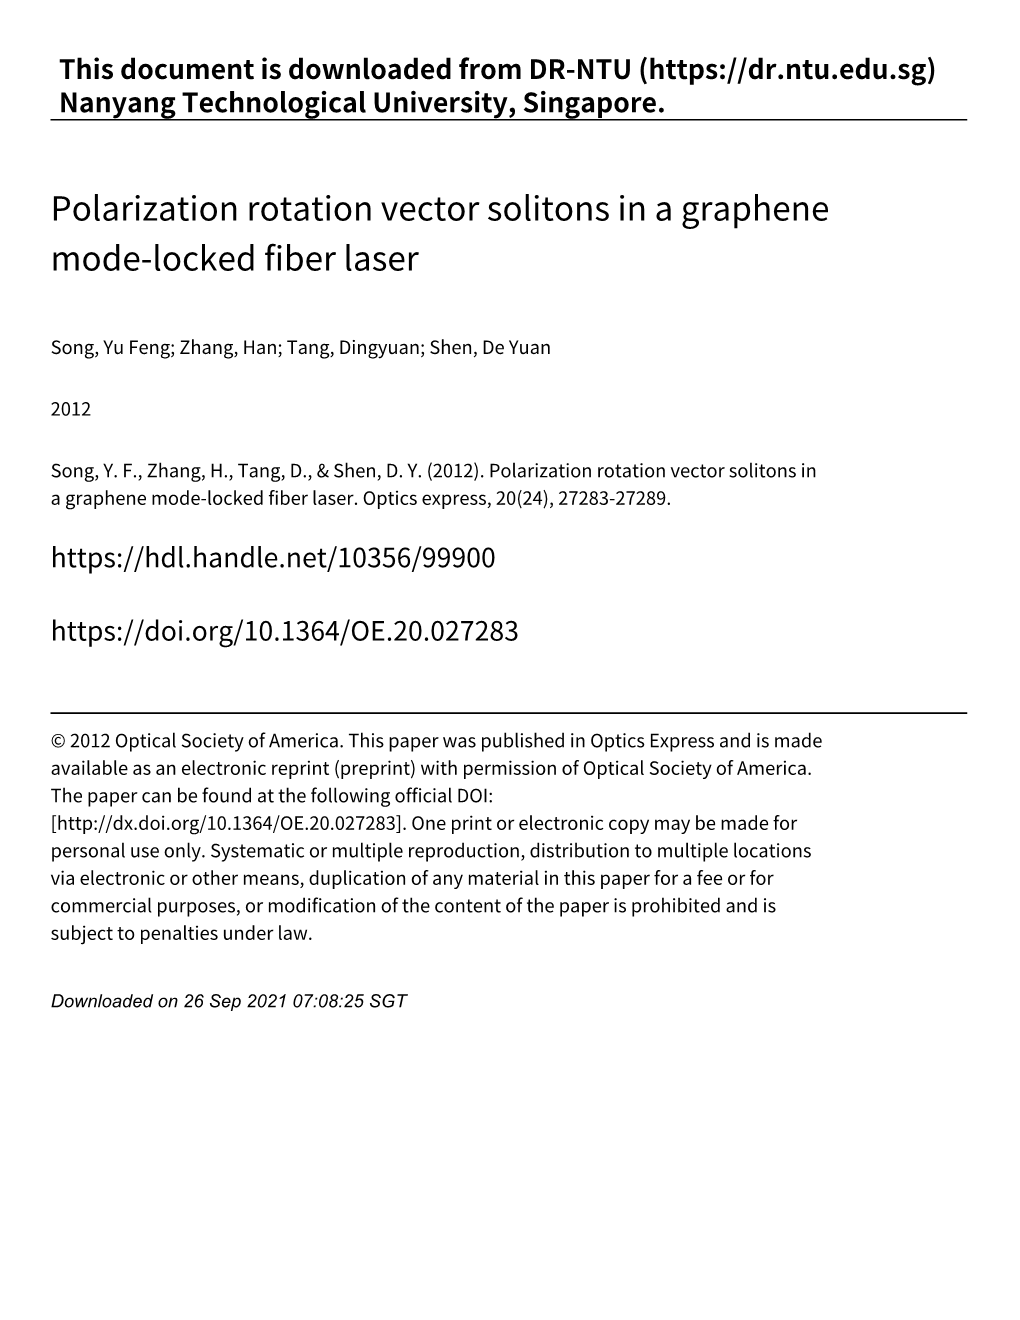 Polarization Rotation Vector Solitons in a Graphene Mode‑Locked Fiber Laser